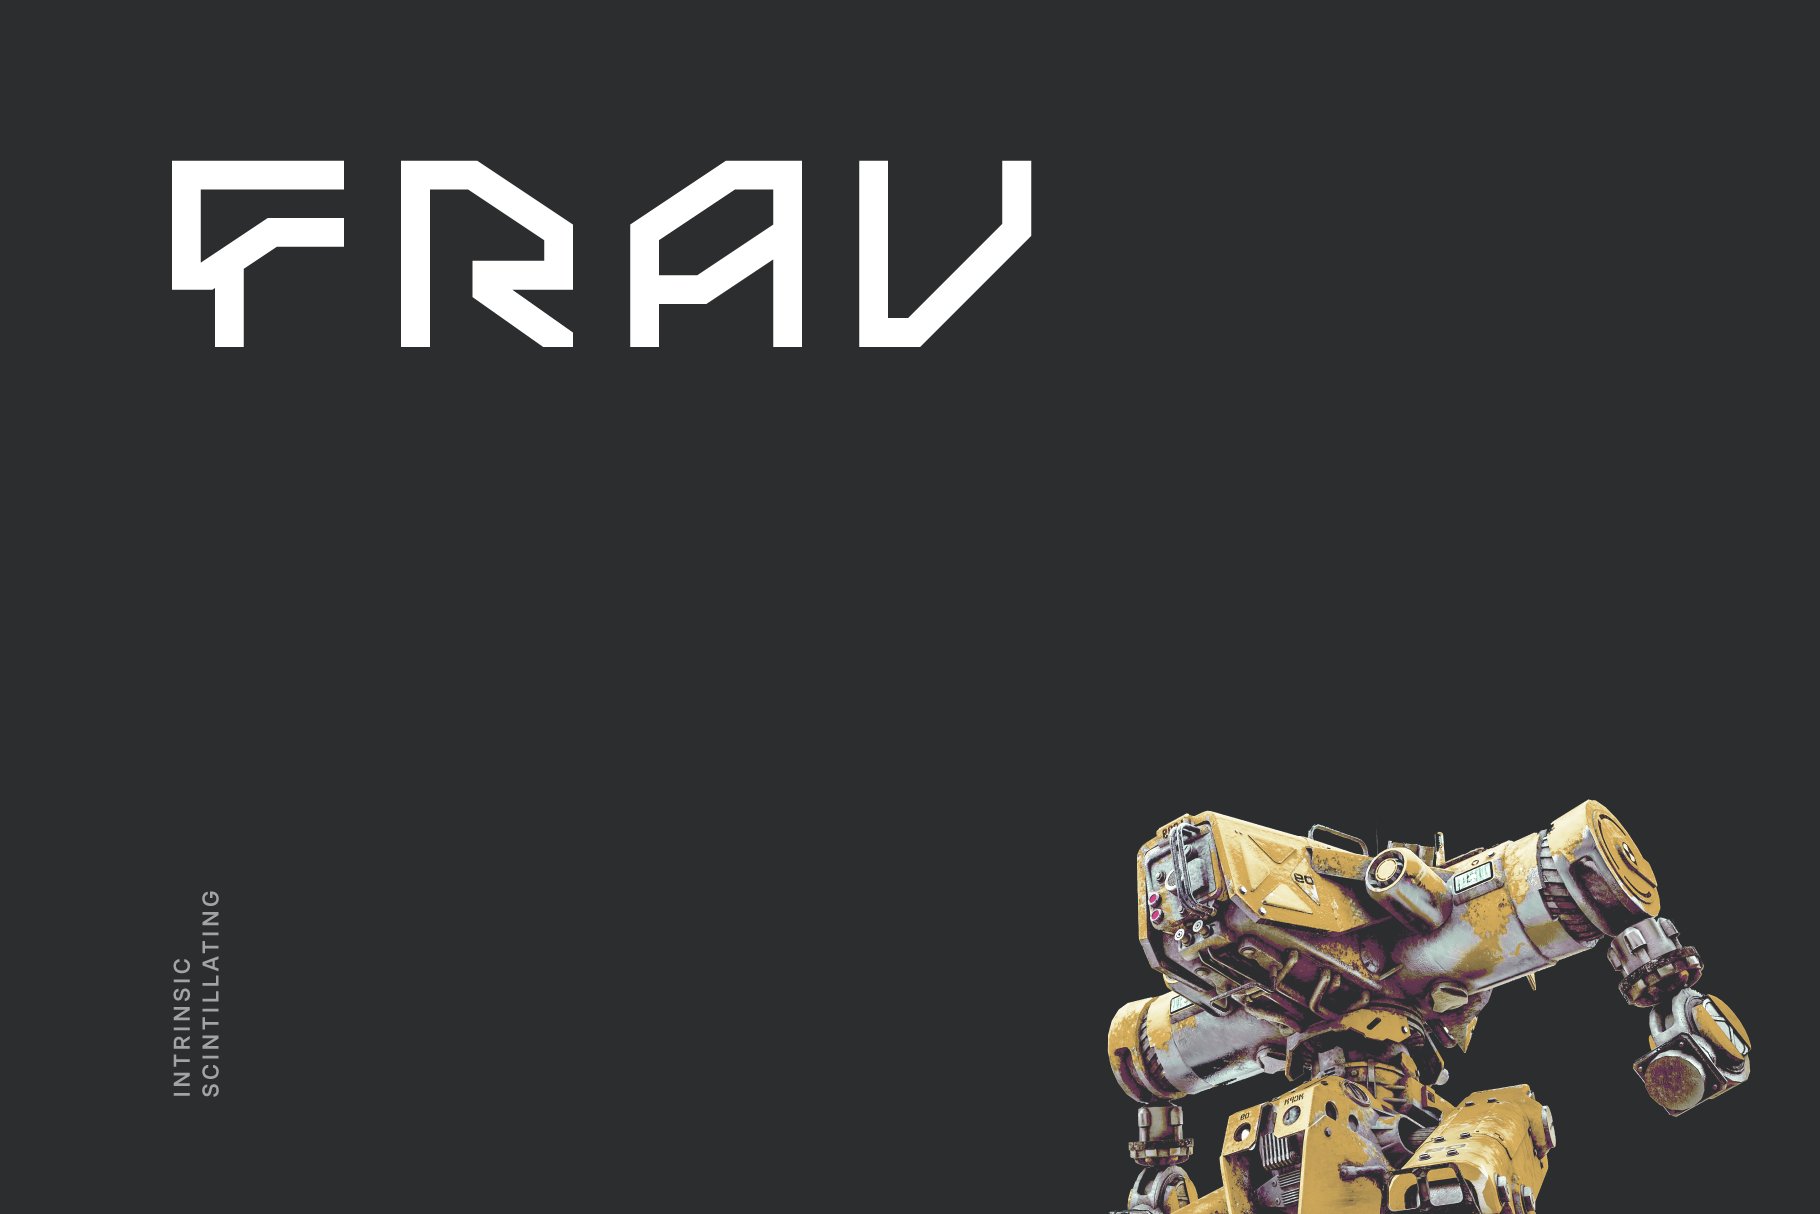 Frav Futuristic Tech Font cover image.